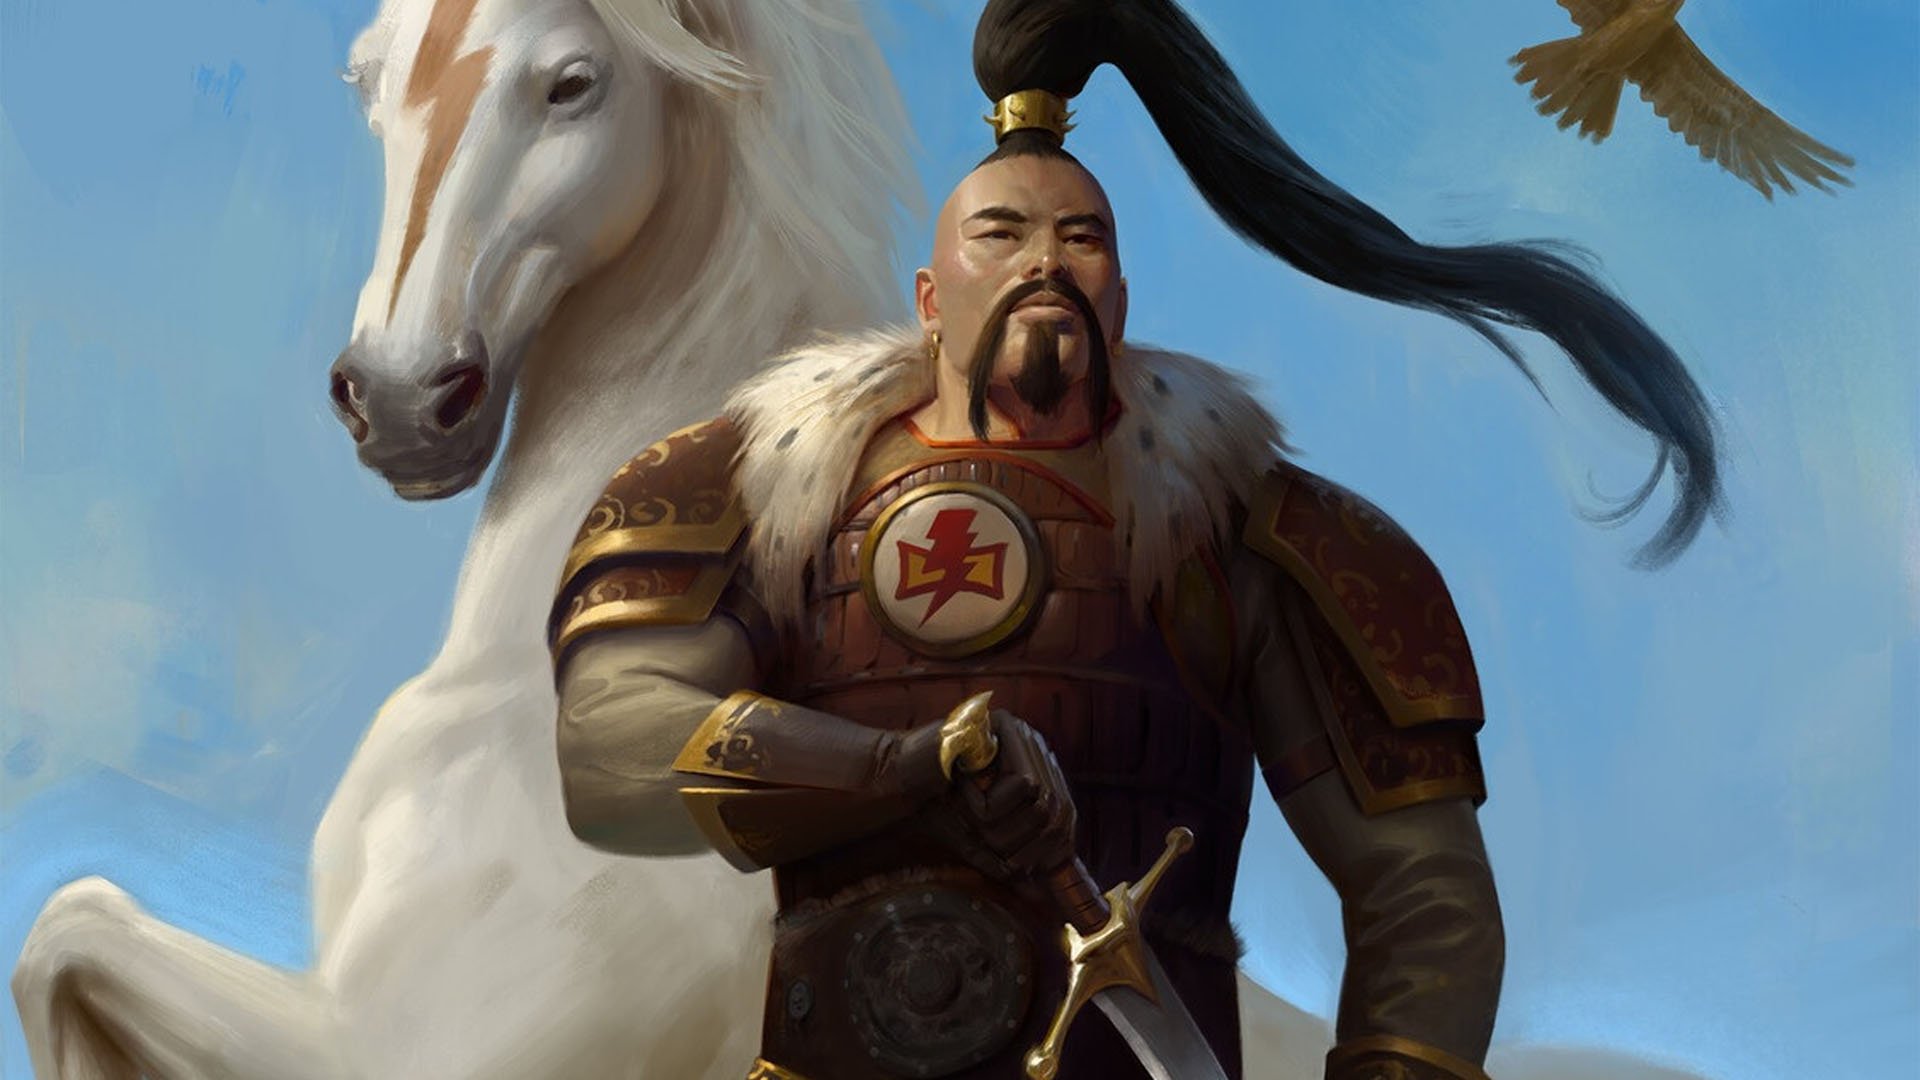 Warhammer 40k Jaghatai Khan guide - Warhammer Community image showing an artwork of the young Jaghatai Khan on Chogoris with a horse